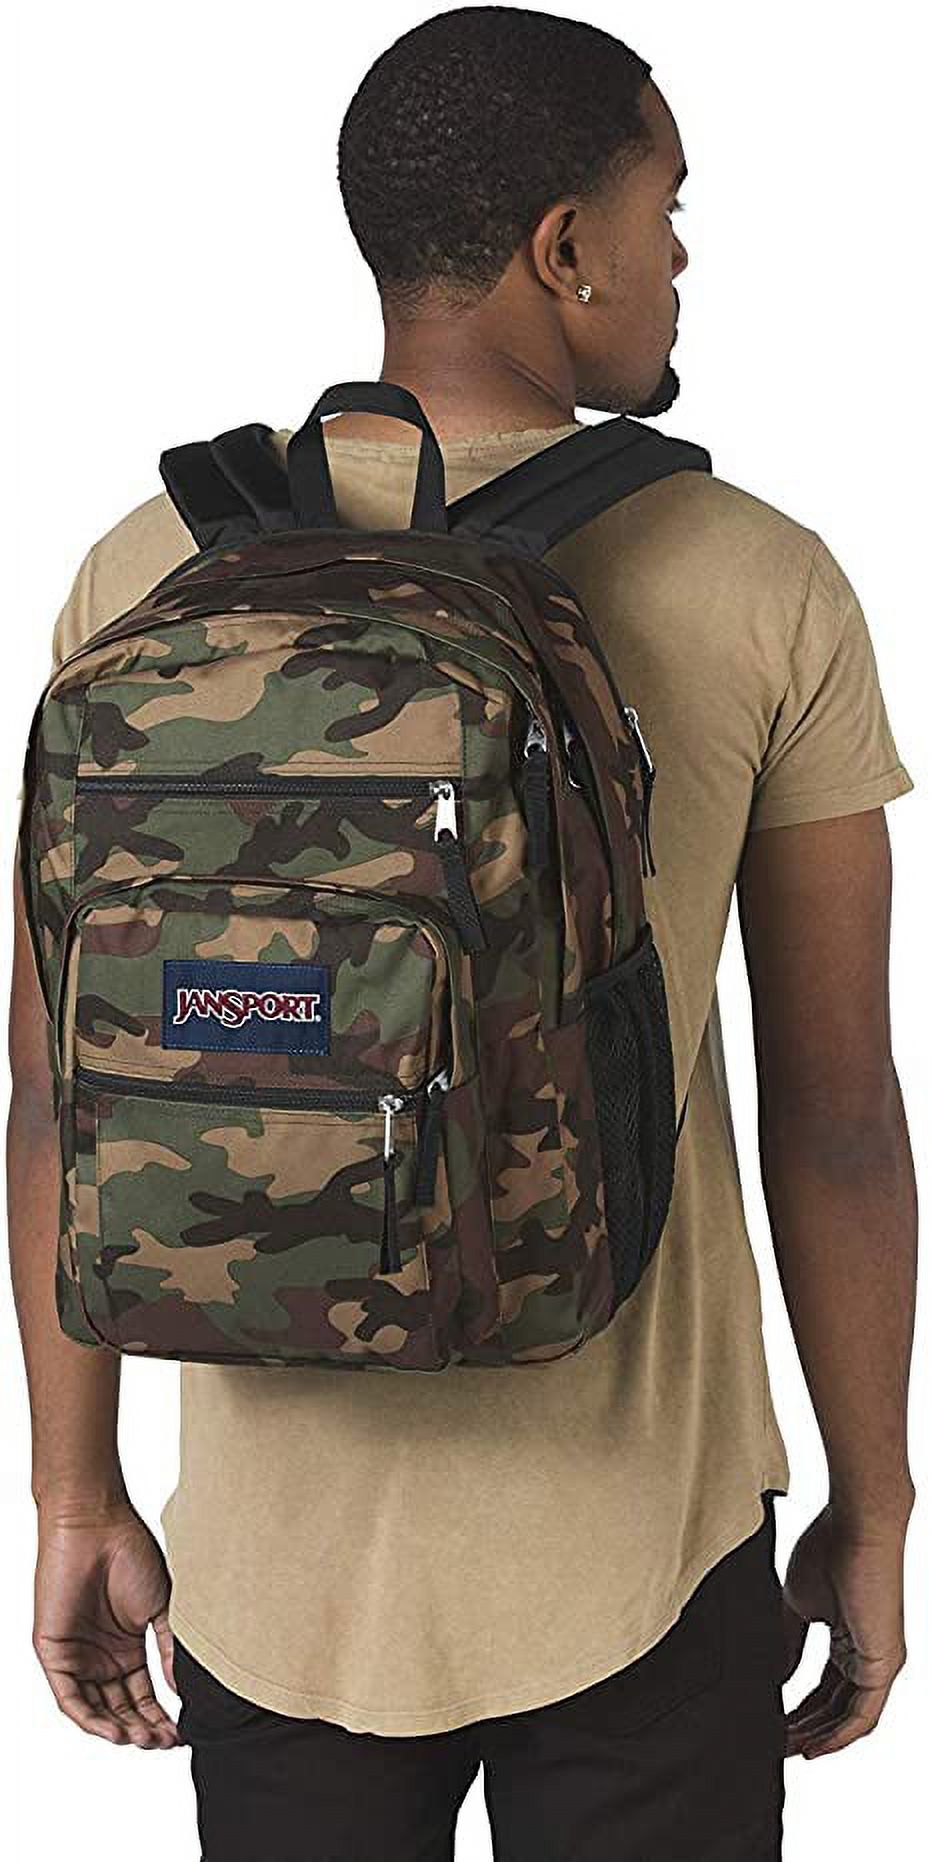 JanSport Big Student Backpack - Surplus Camo - image 3 of 4